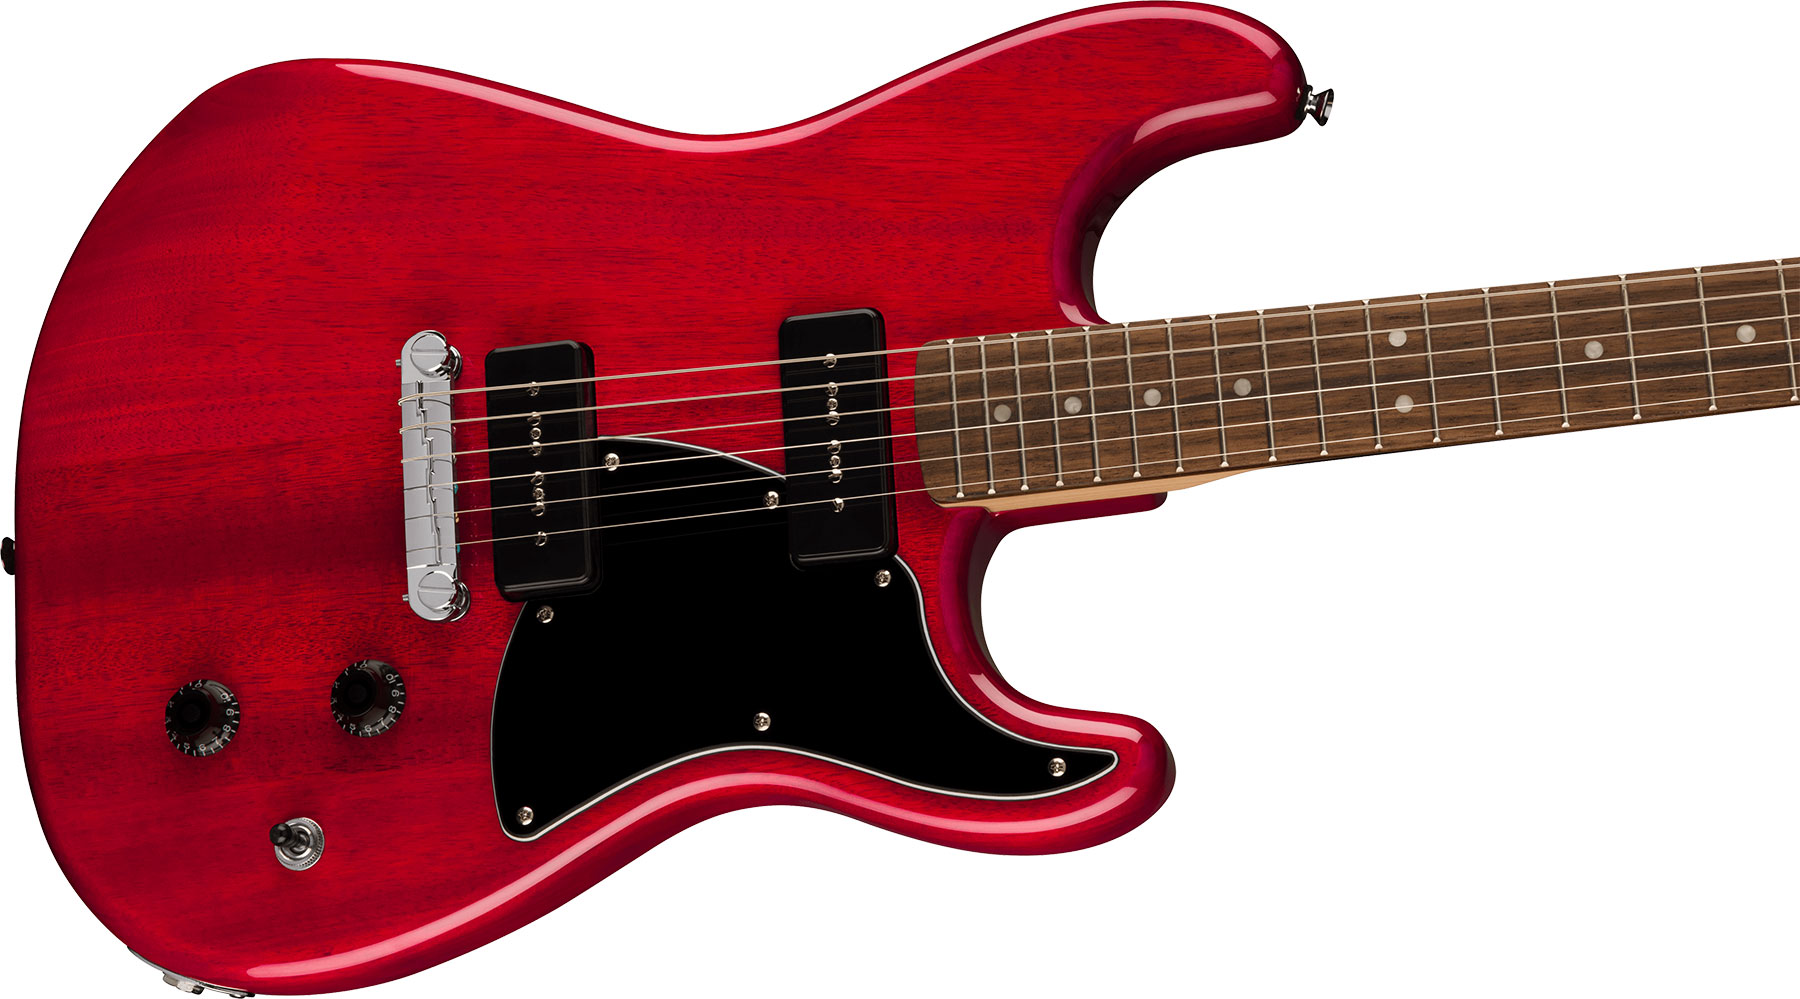 Squier Strat-o-sonic Paranormal 2s P90 Ht Lau - Crimson Red Transparent - Str shape electric guitar - Variation 2